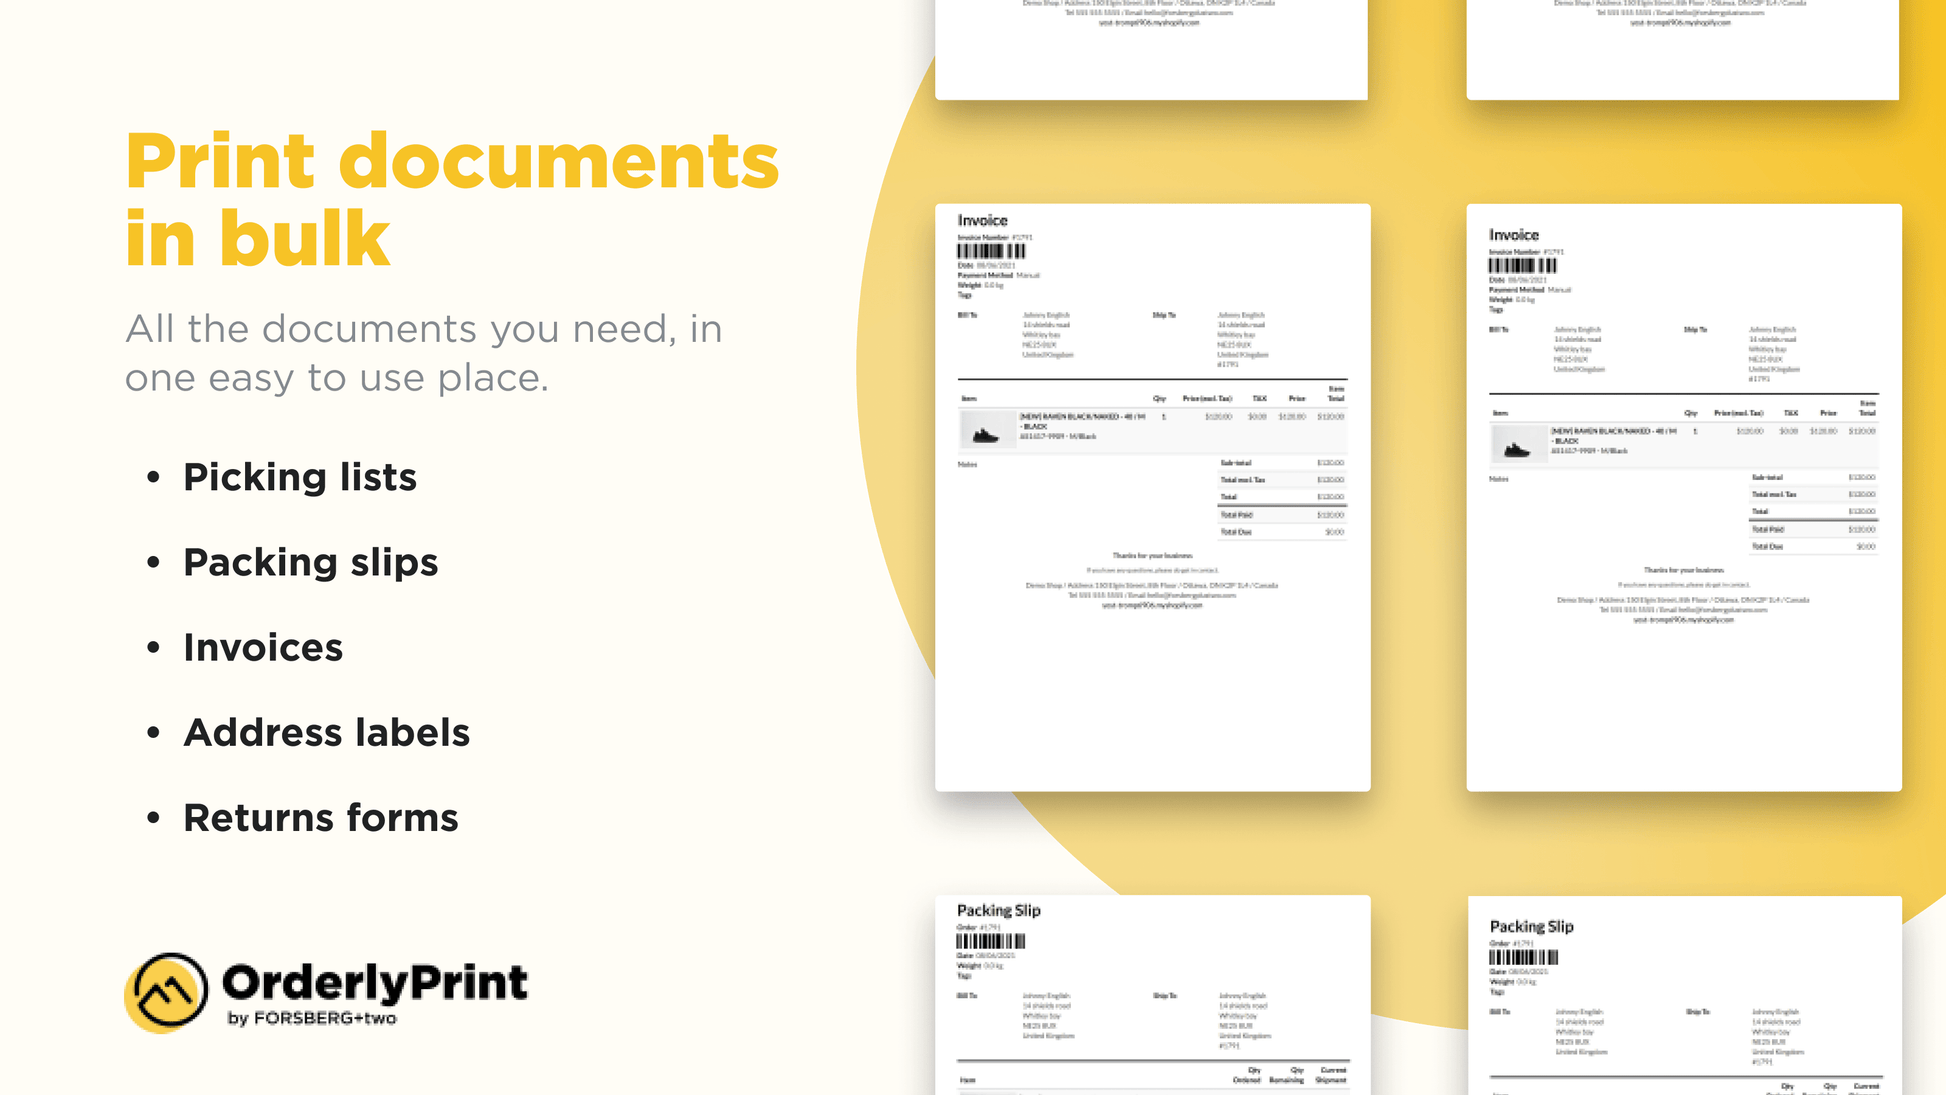 Print documents in bulk